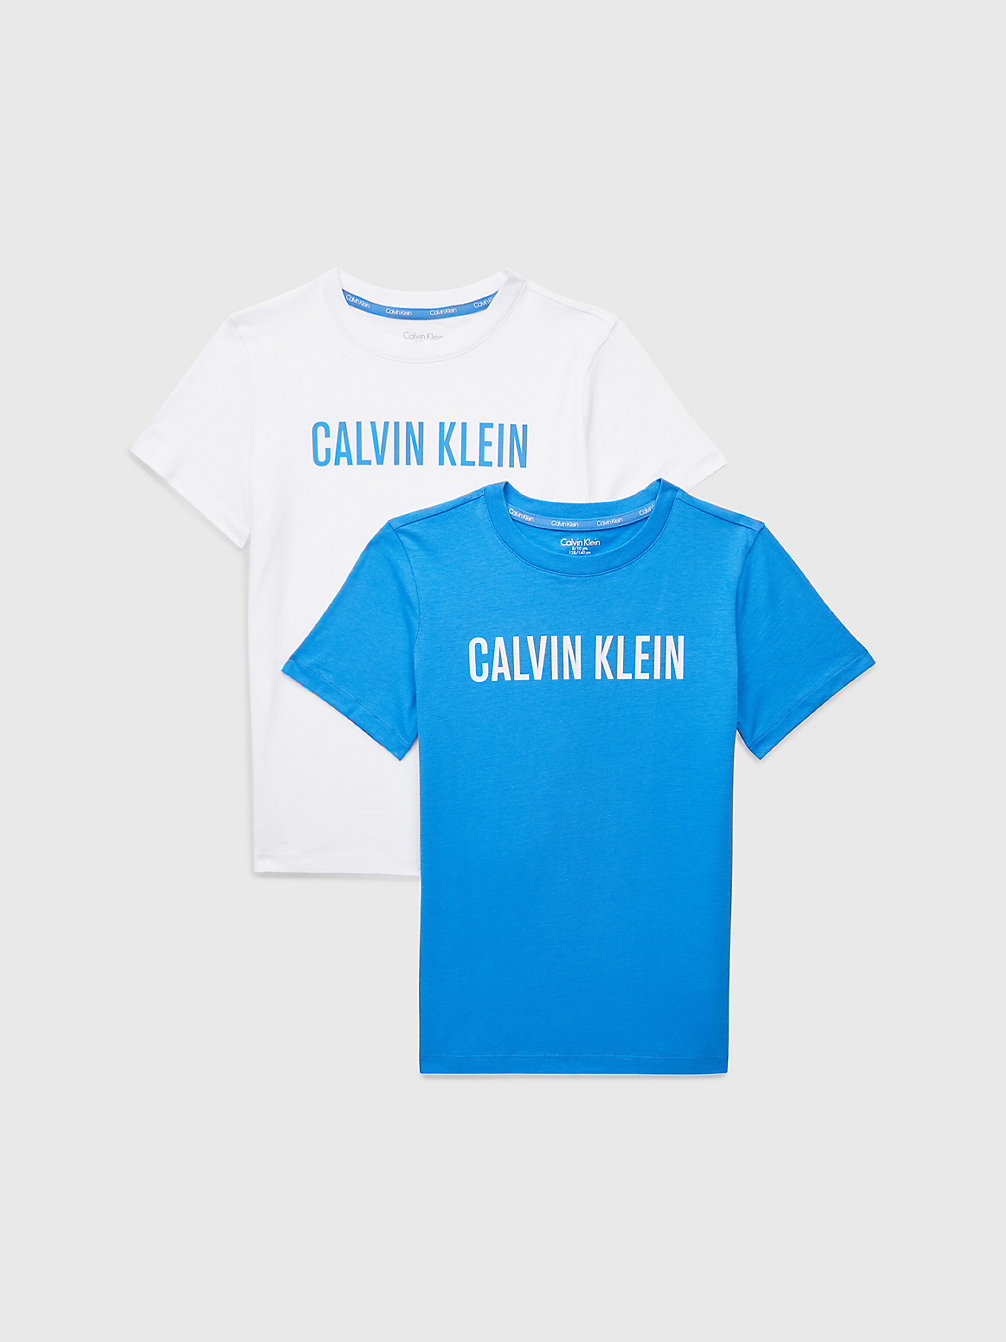 ELECTRICAQUA/PVHWHITE > 2-Pack T-Shirts Jongens - Intense Power > undefined boys - Calvin Klein